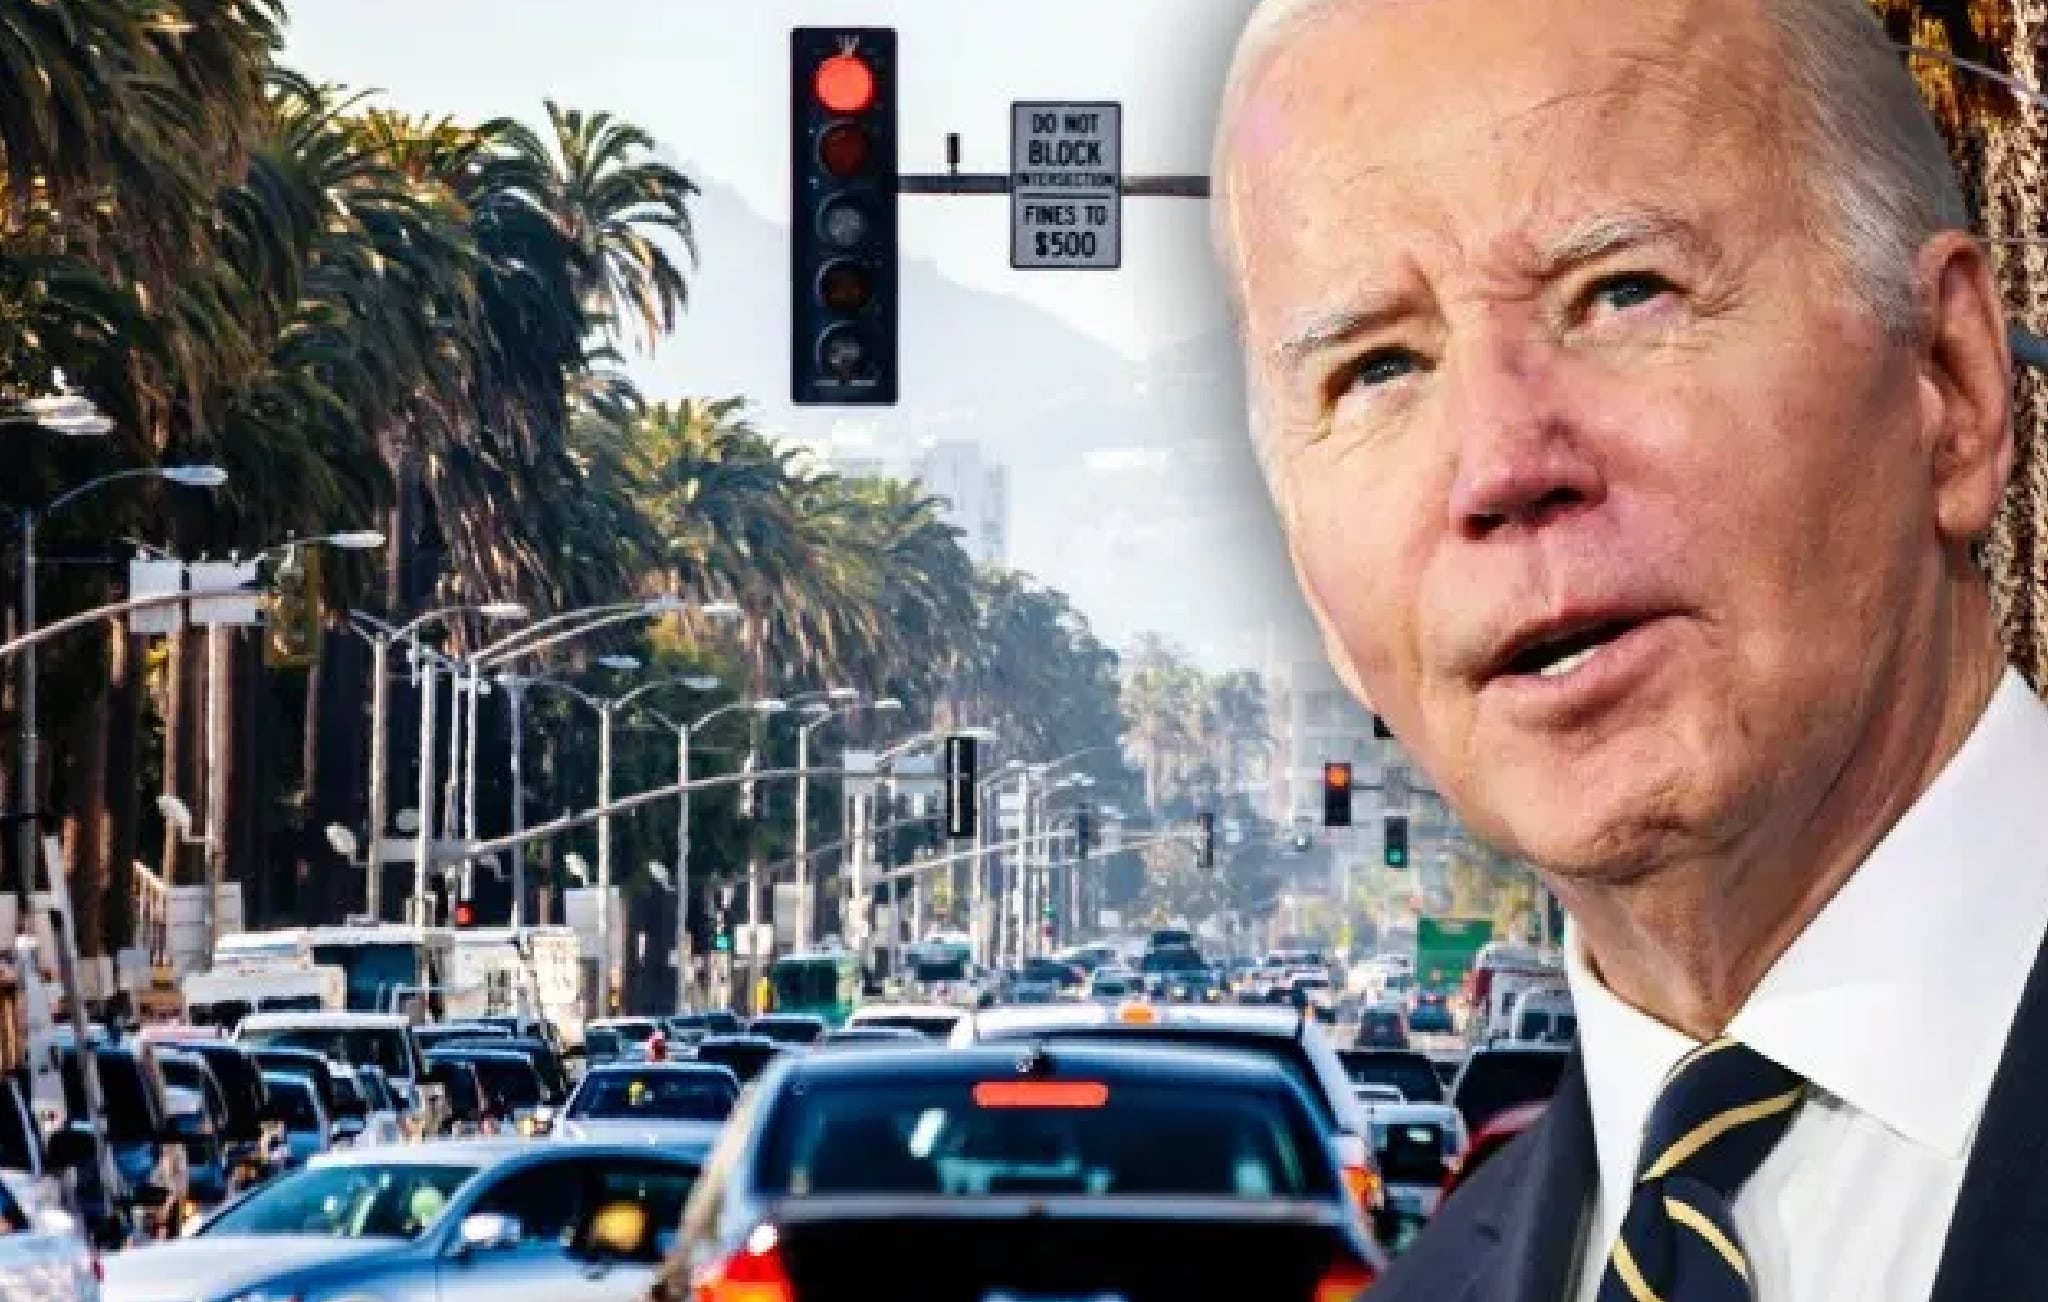 Joe Biden’s L.A. Visit